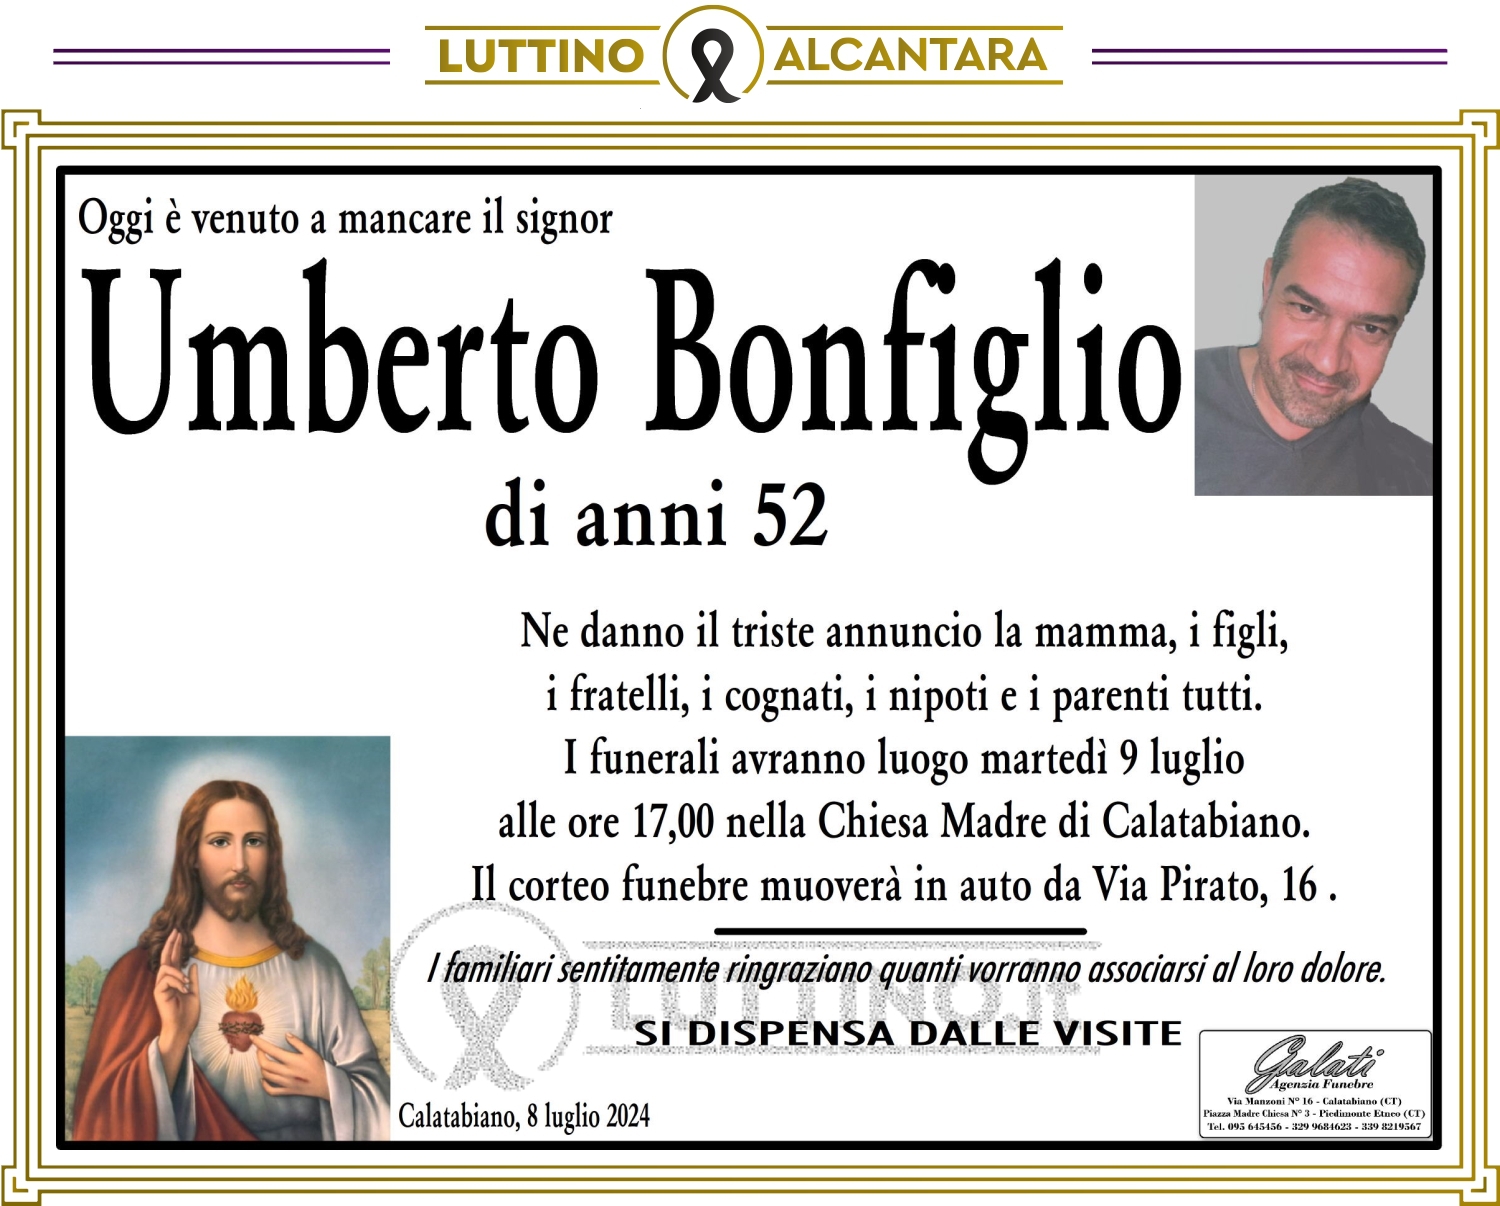 Umberto Bonfiglio